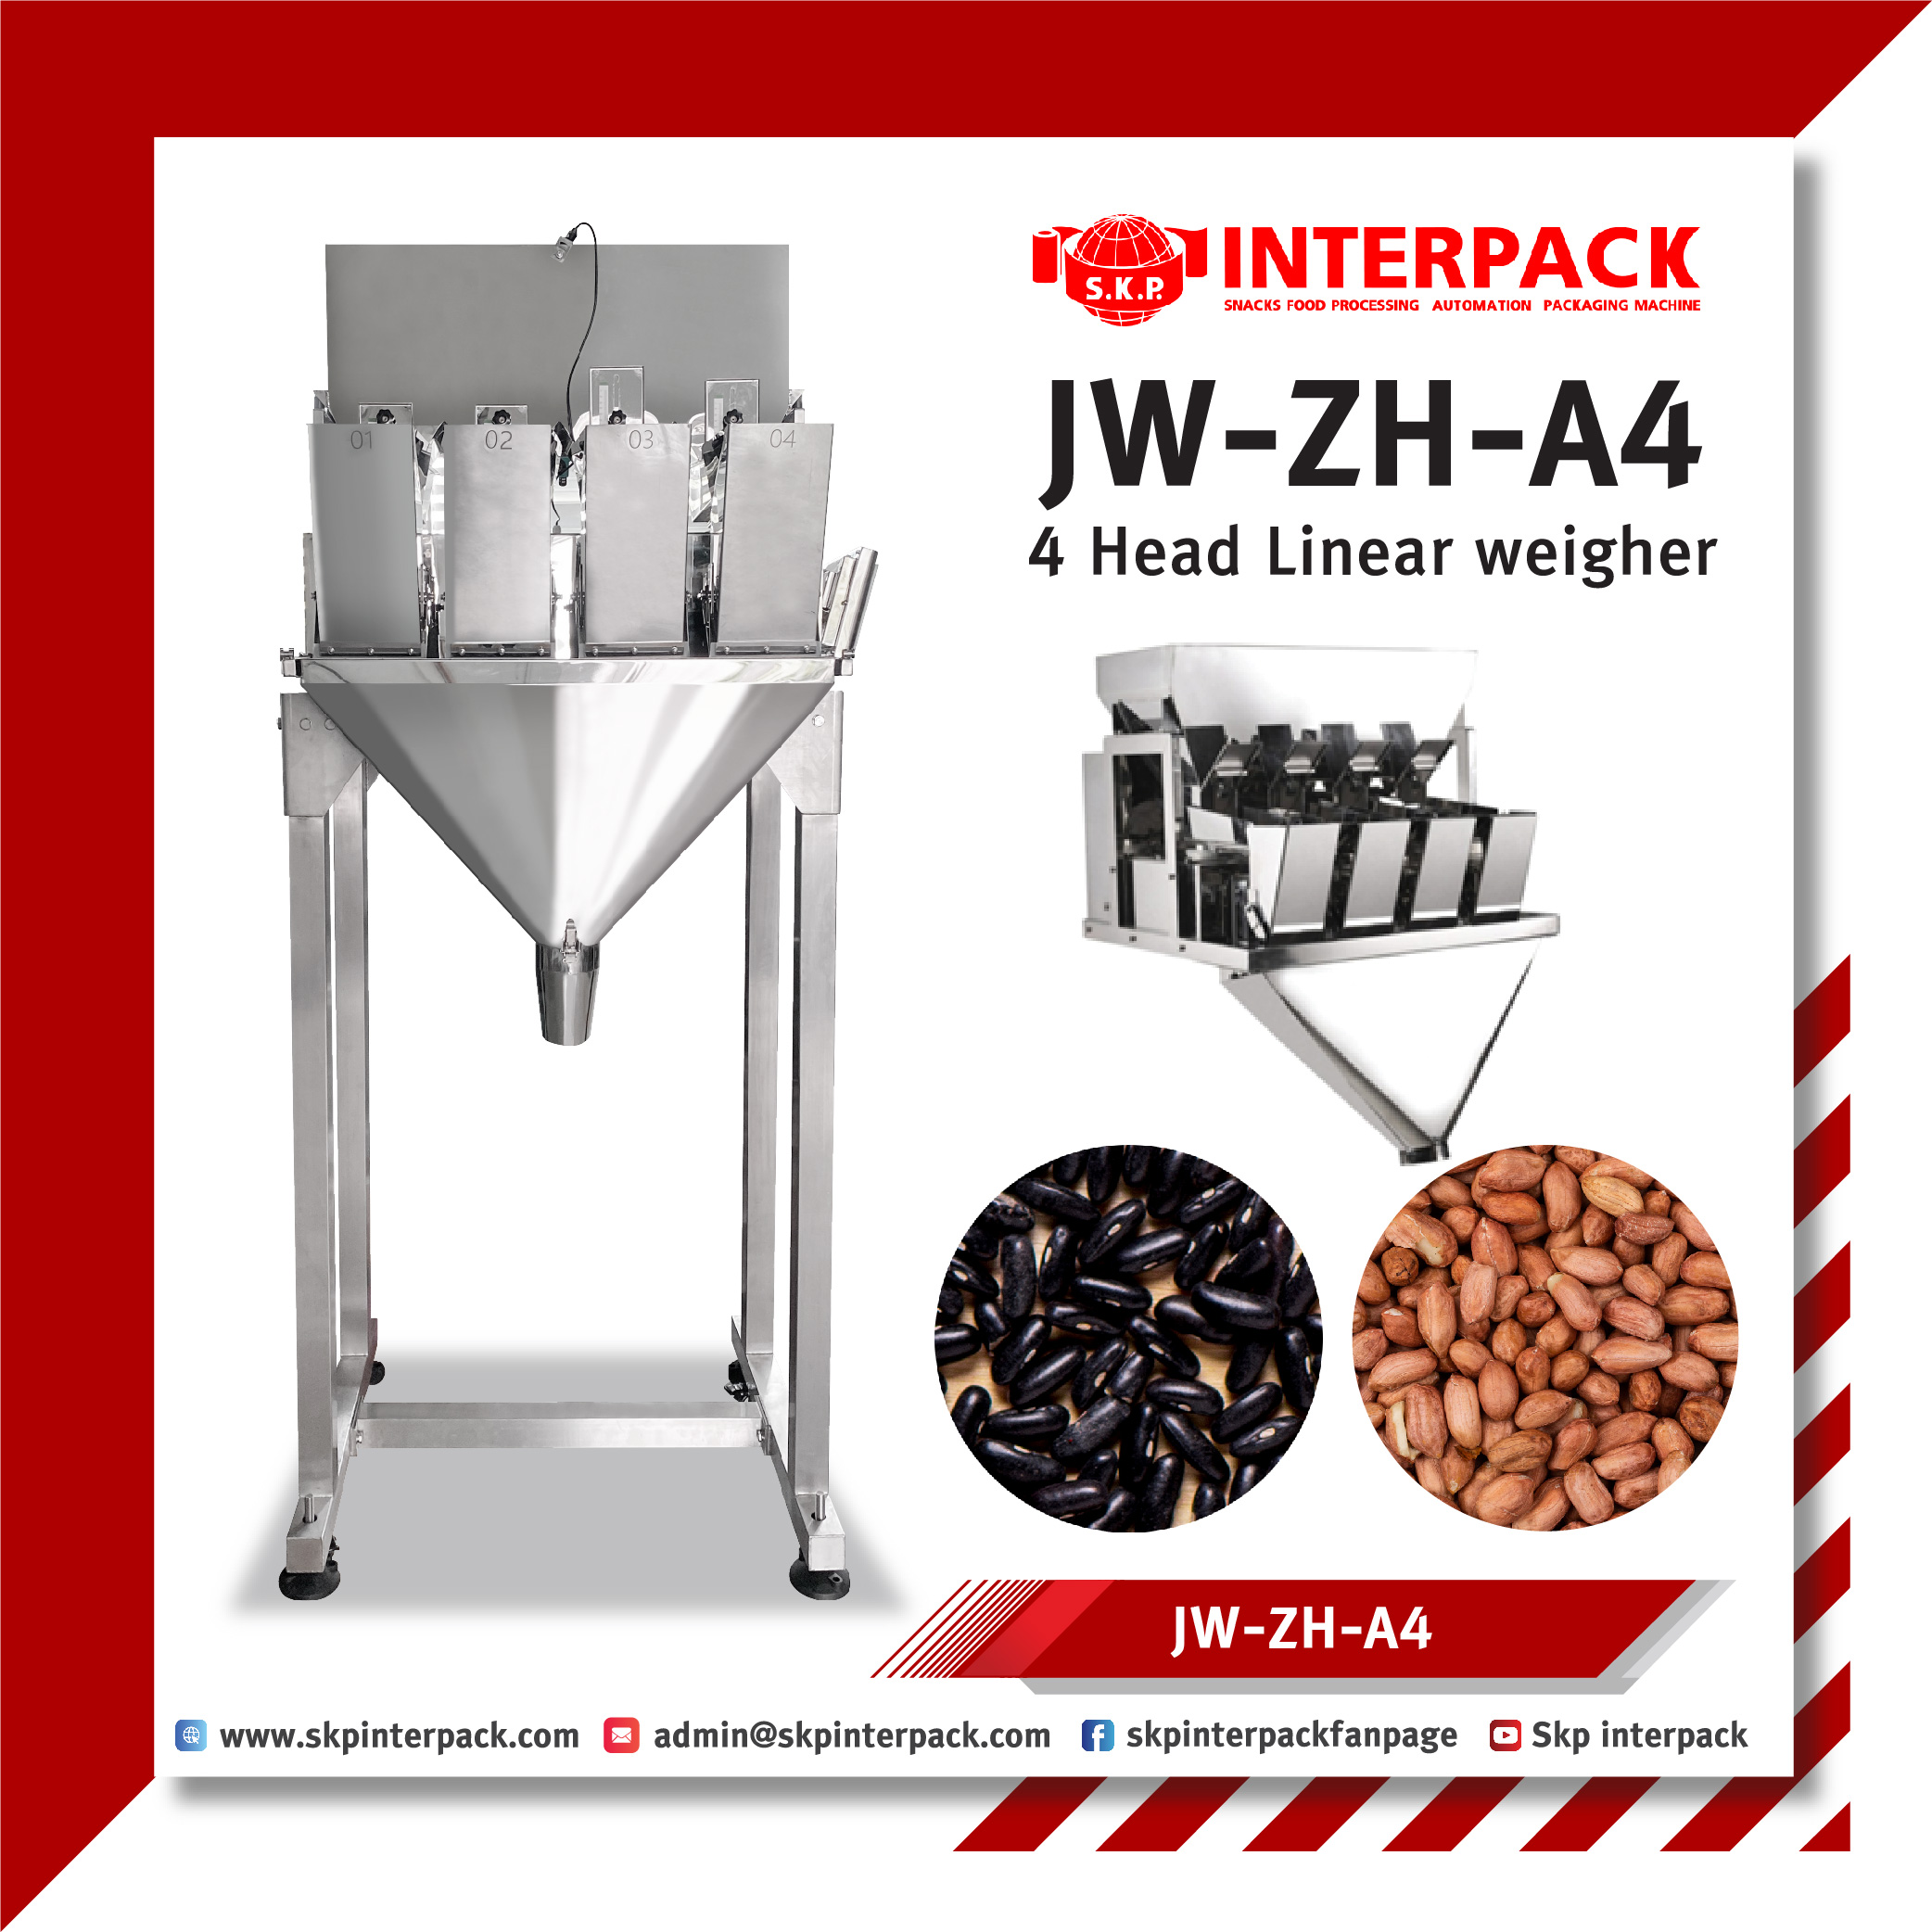 JW-ZH-A4 4 Head Linear weigher